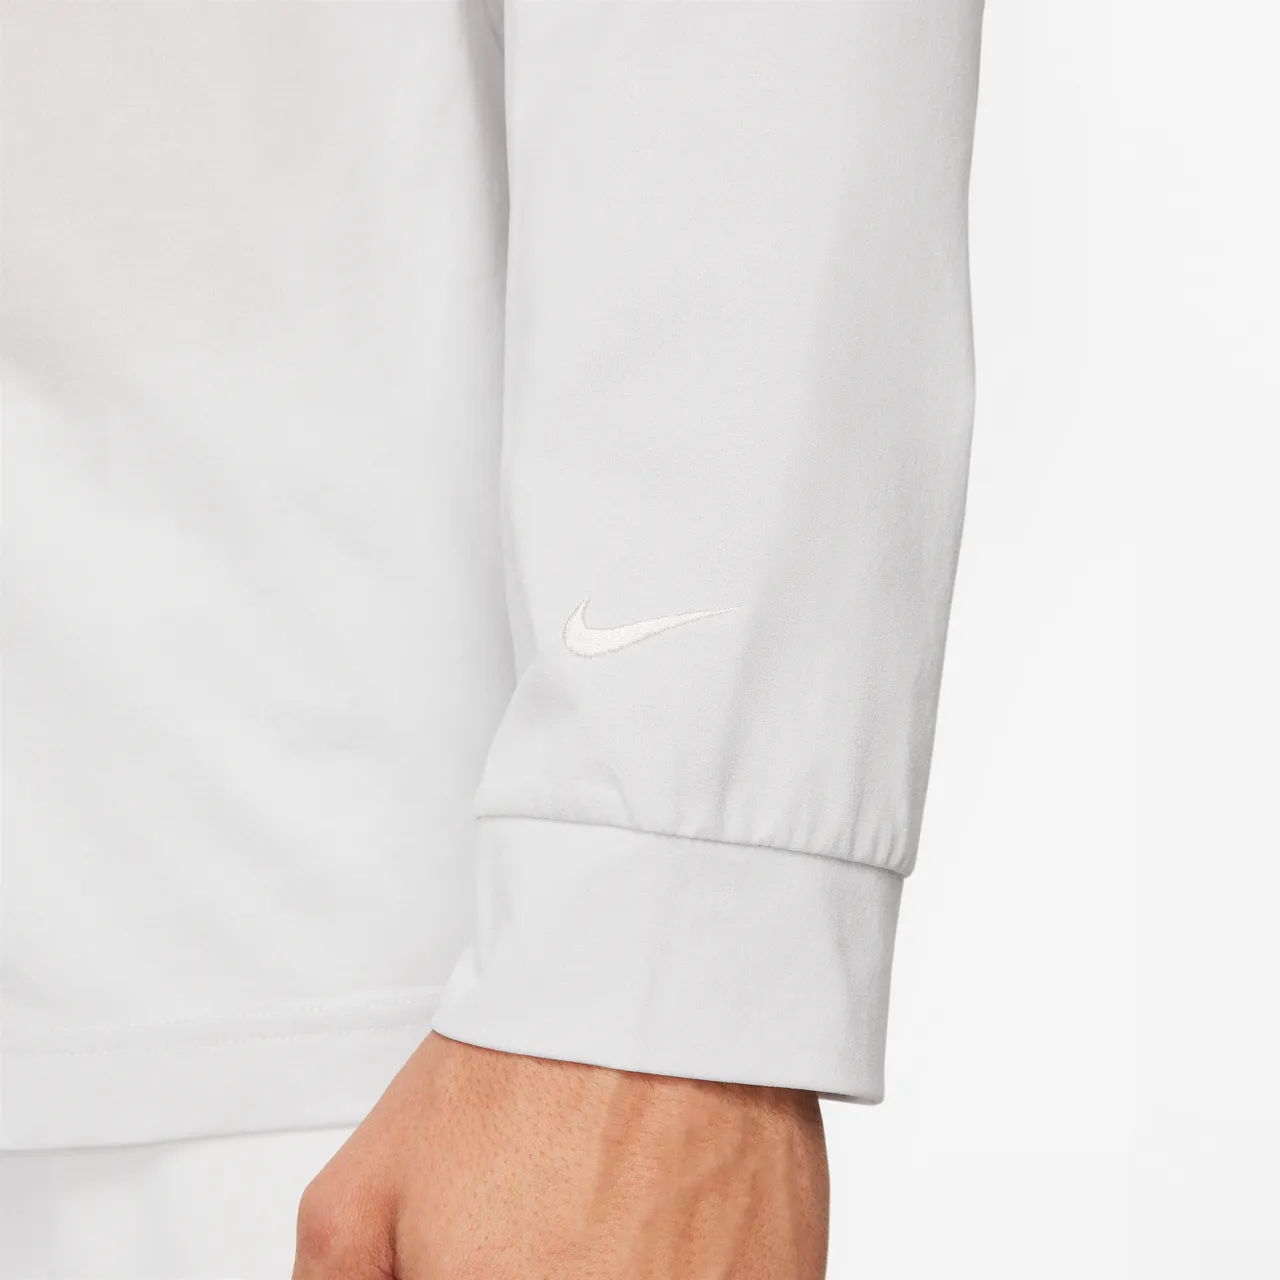 Nike Track Club Men's Dri-FIT Hyverse Long-Sleeve Running Top - Grey - Polyester